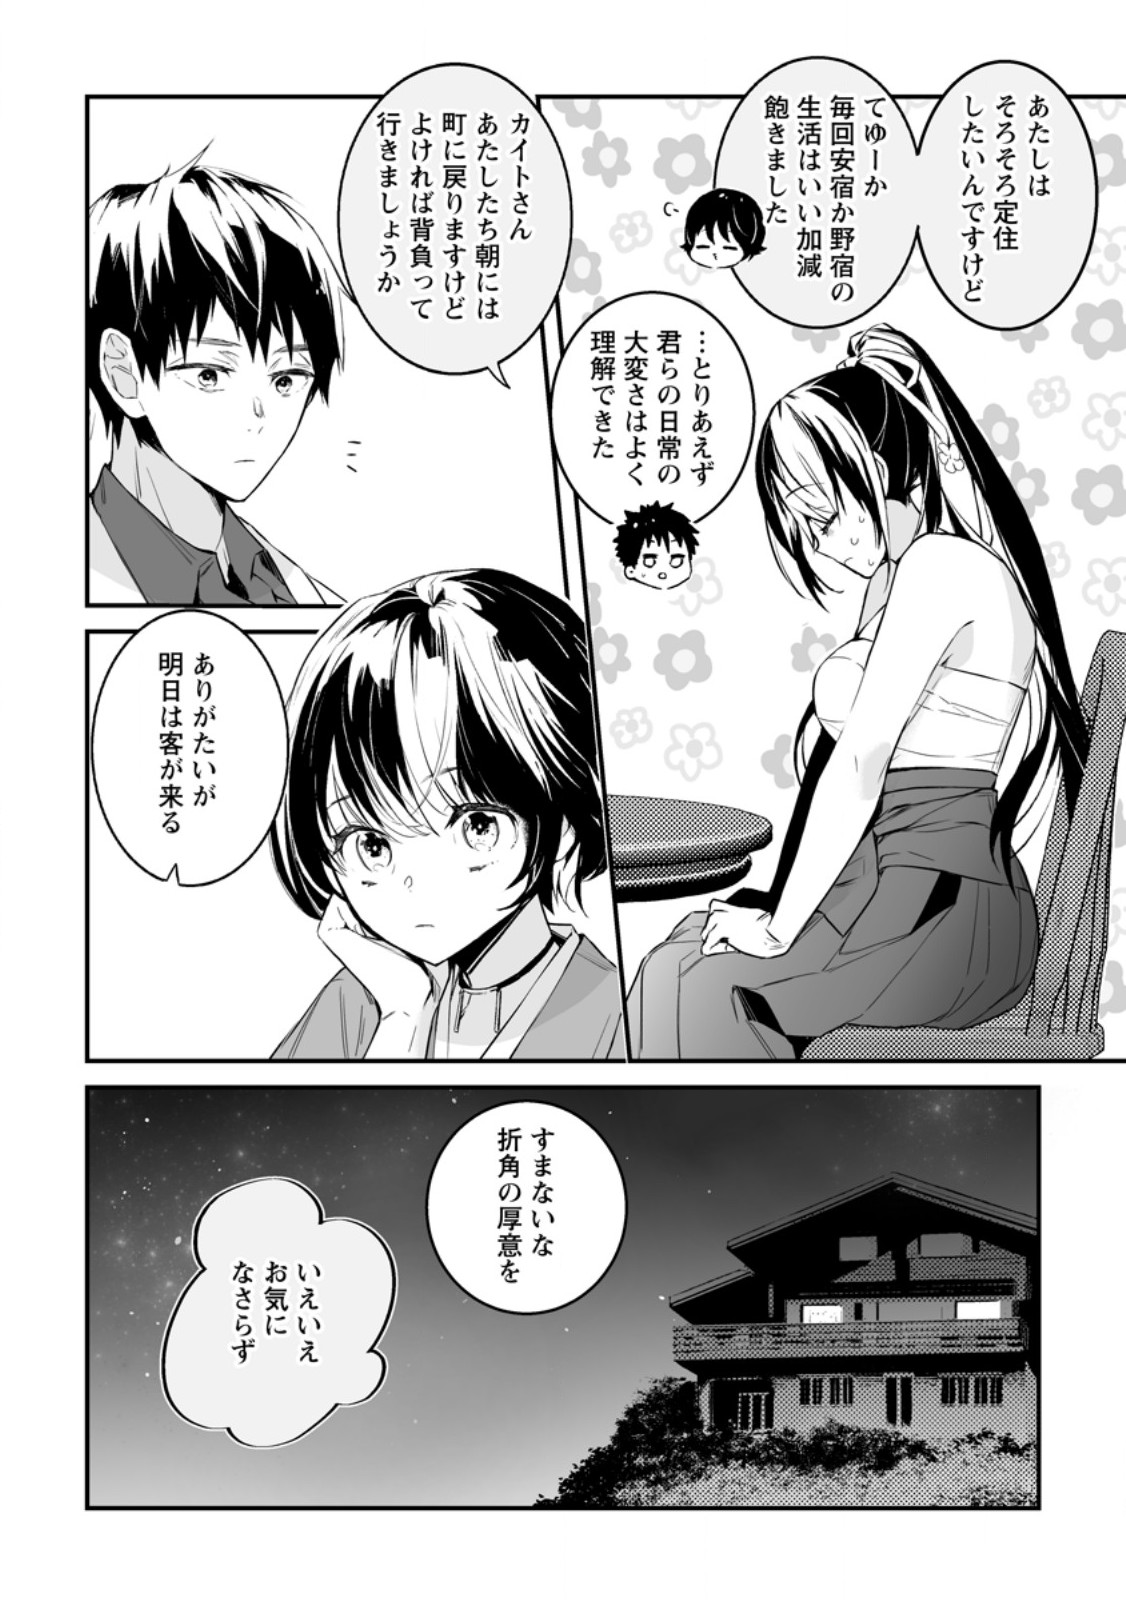 Hakui no Eiyuu - Chapter 32.3 - Page 9